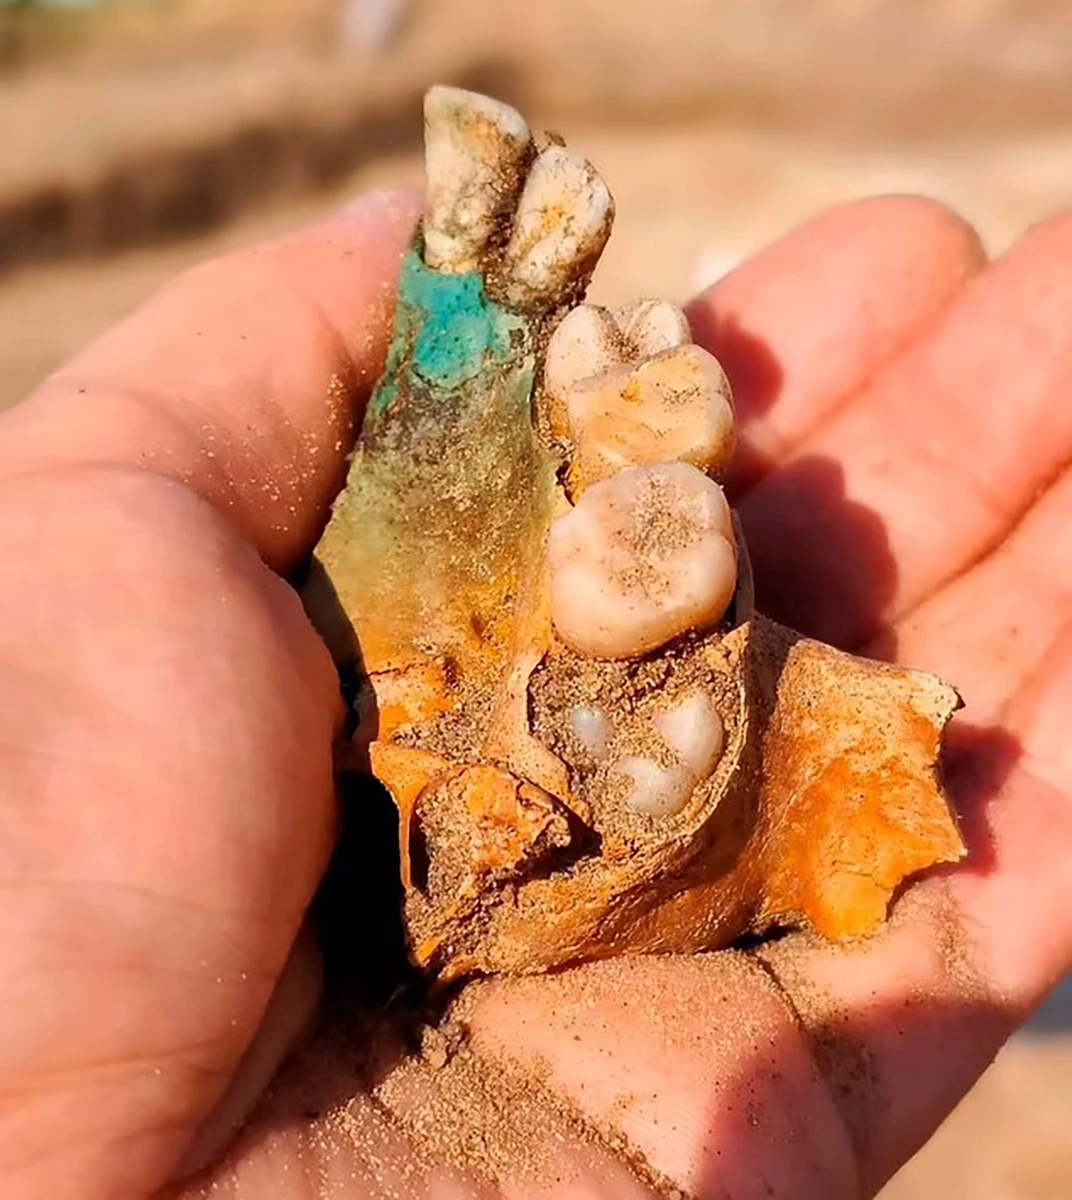 <p>На фото: фрагмент челюсти, который археологи нашли возле могилы ребенка</p>